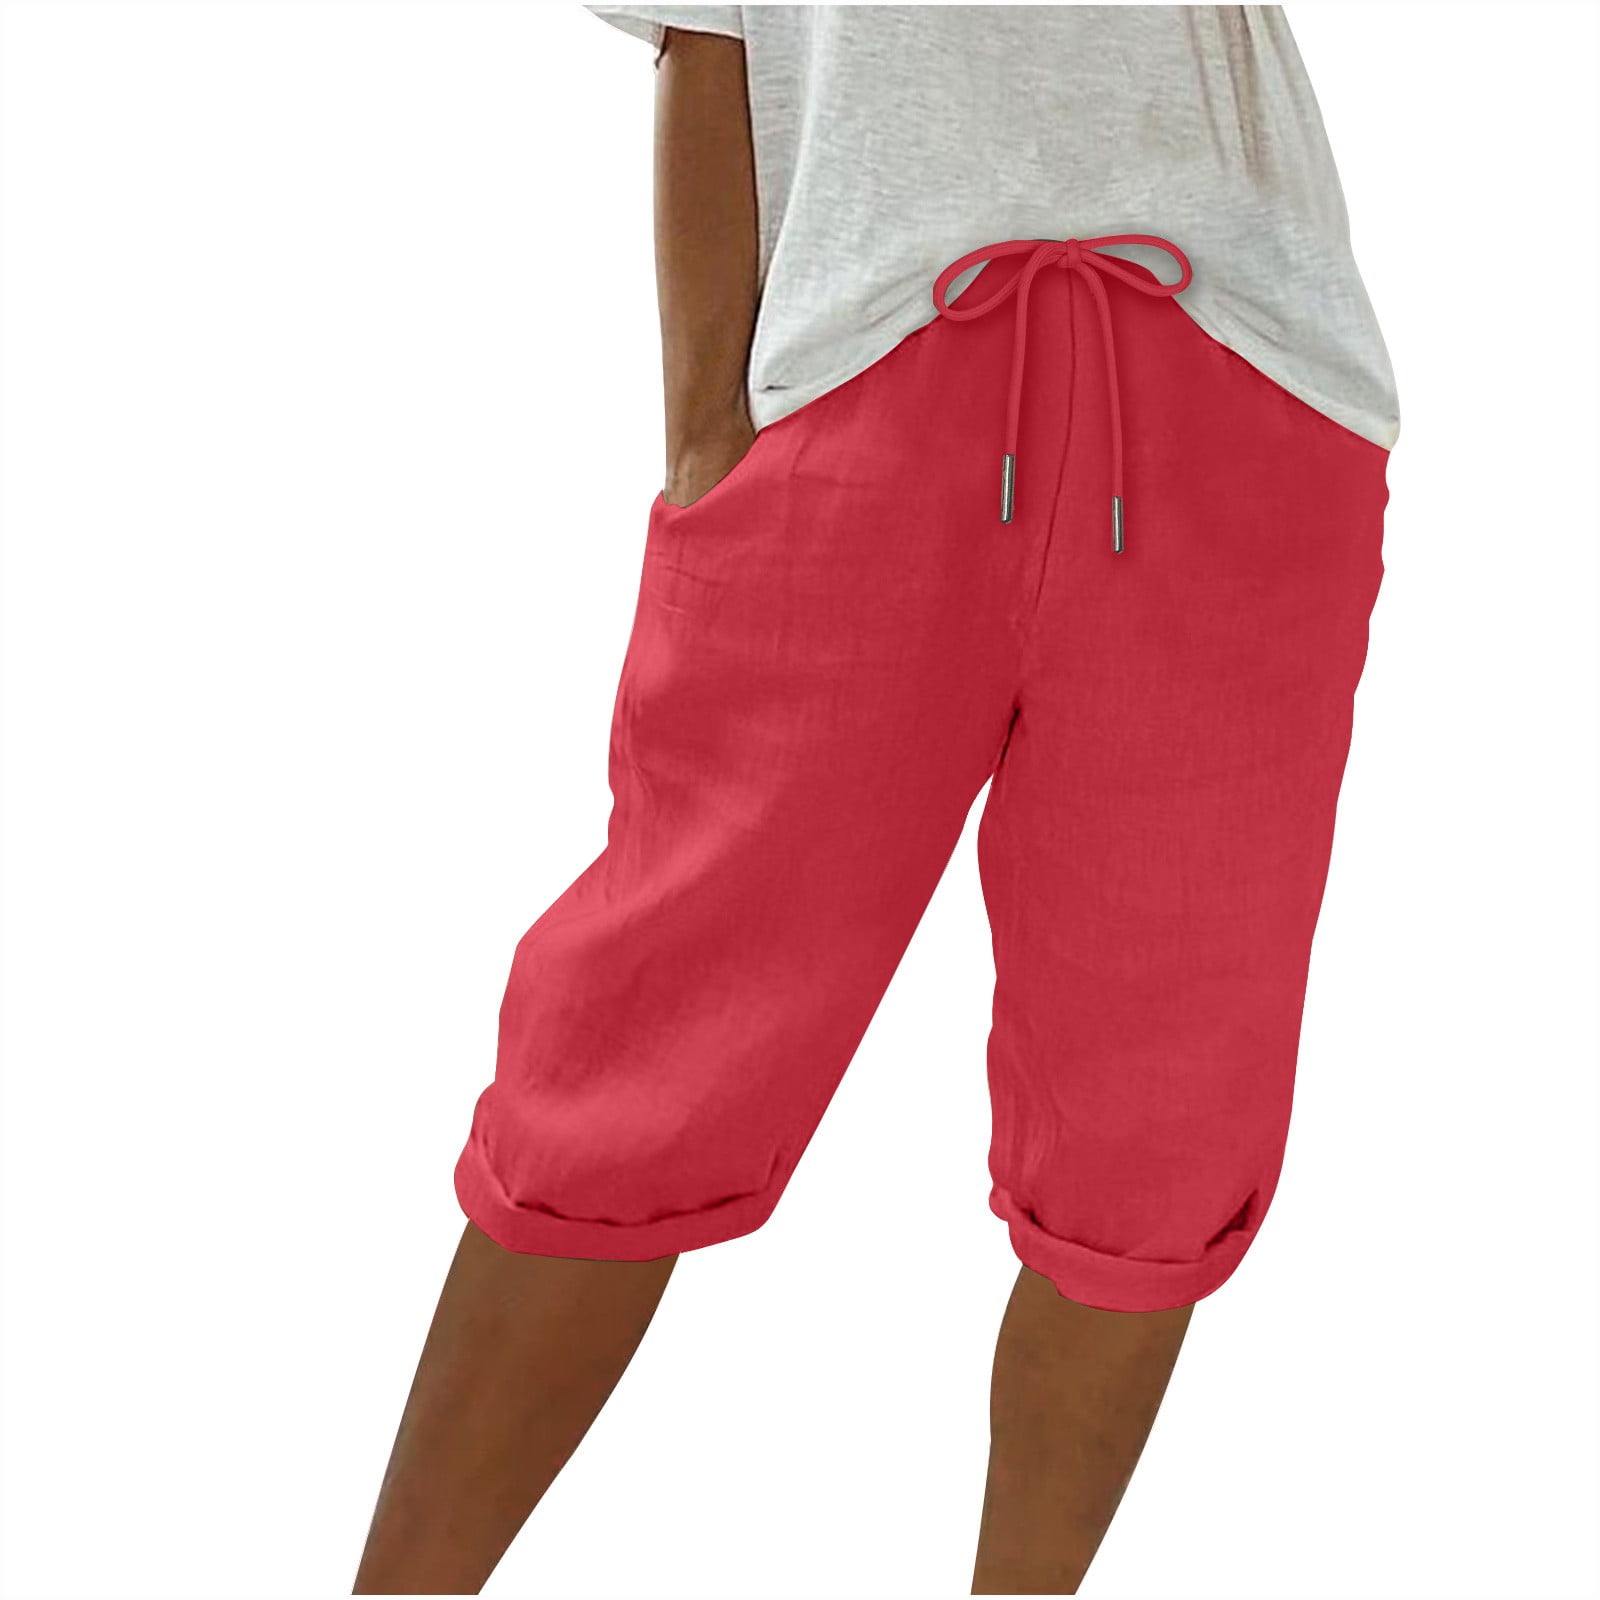 Annhoo Plus Size Cotton Linen Shorts for Womens Summer Drawstring ...